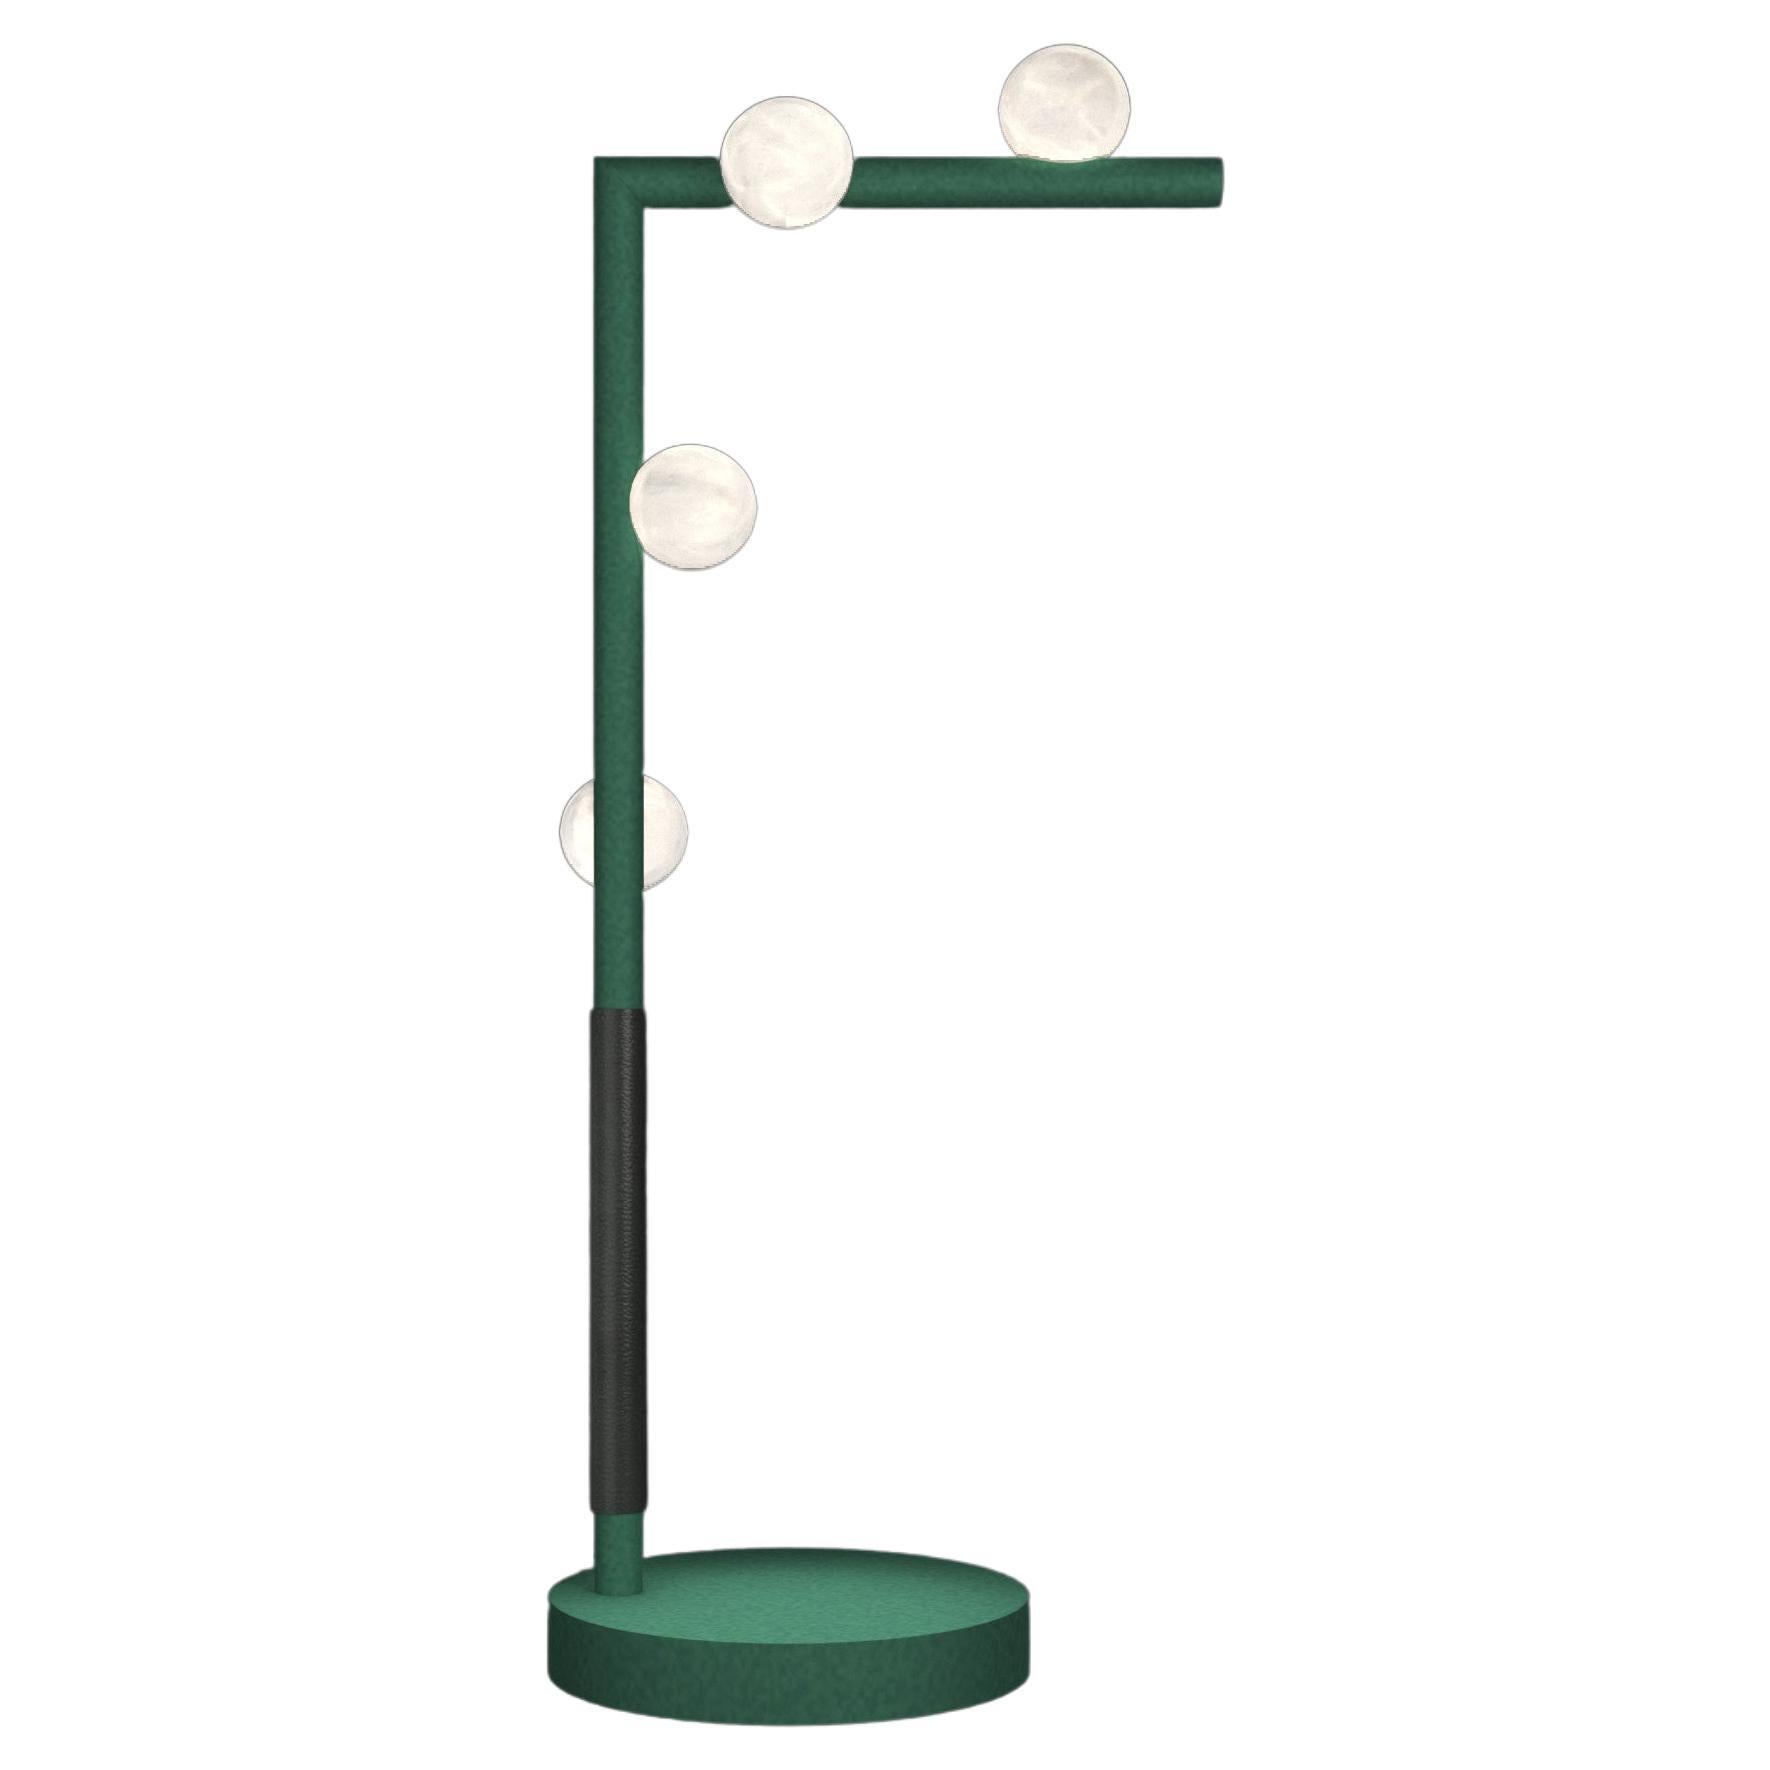 Demetra Freedom Green Metal Table Lampe d'Alabastro Italiano